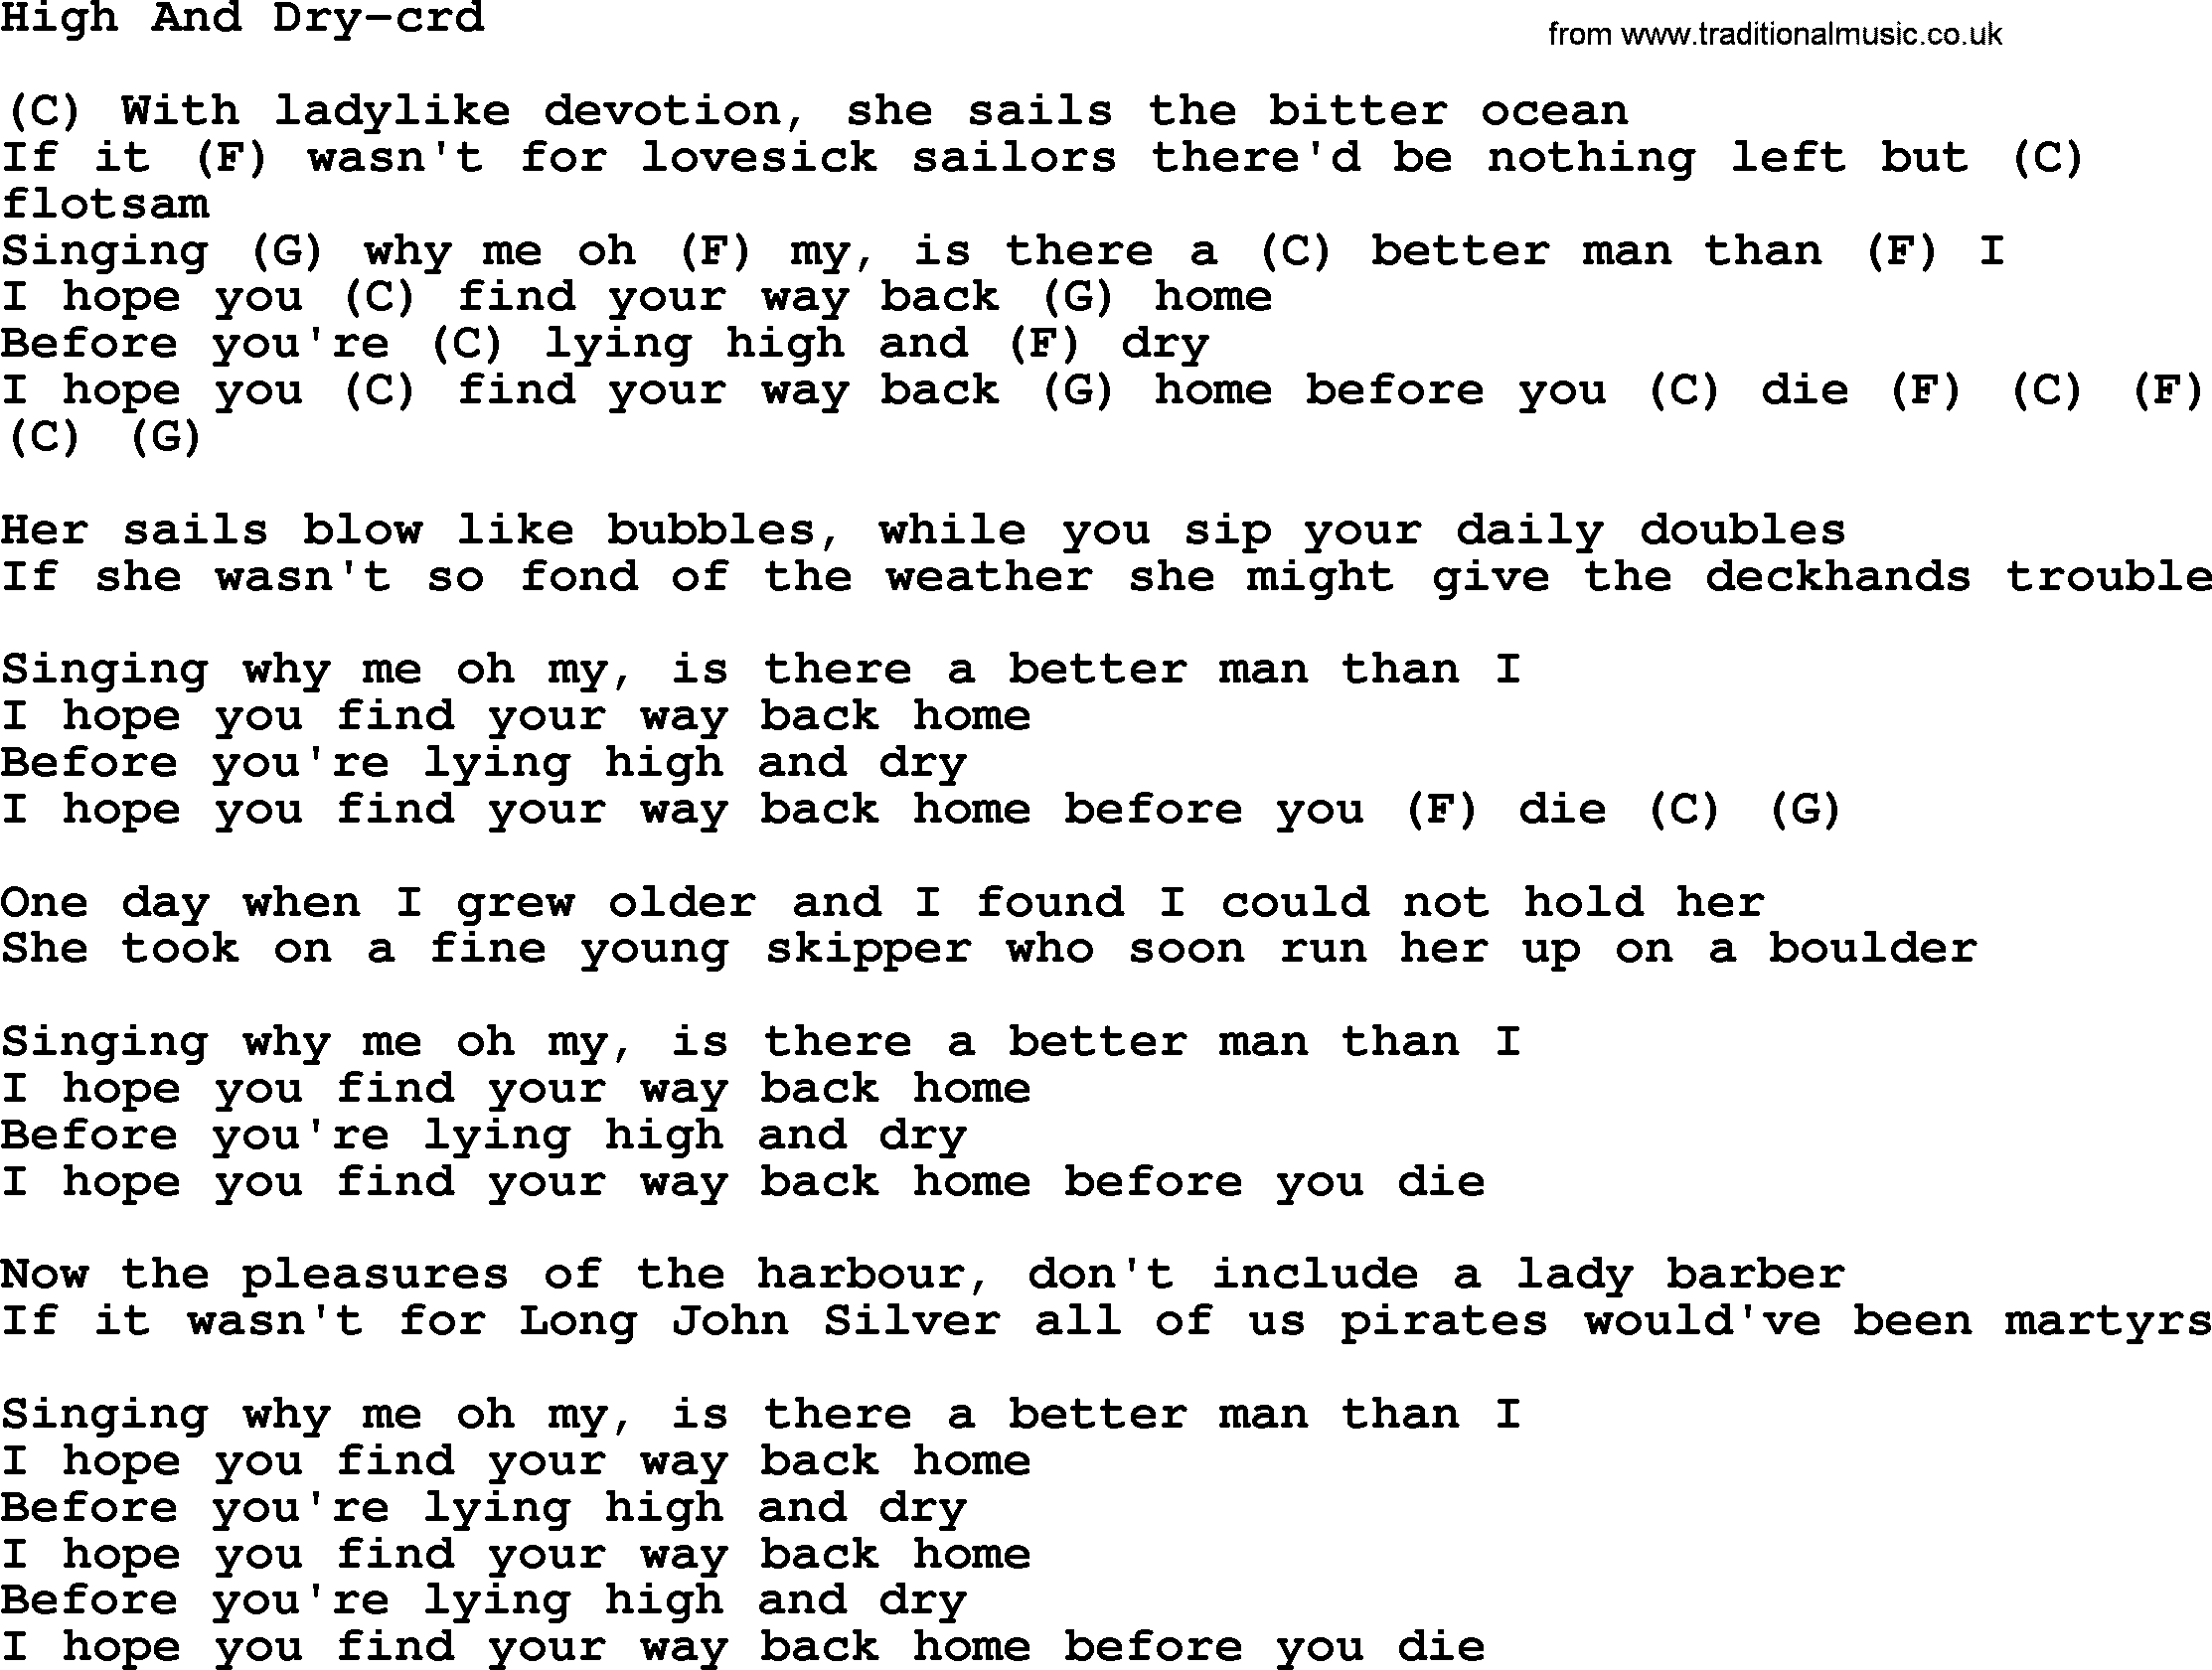 Gordon Lightfoot song High And Dry, lyrics and chords